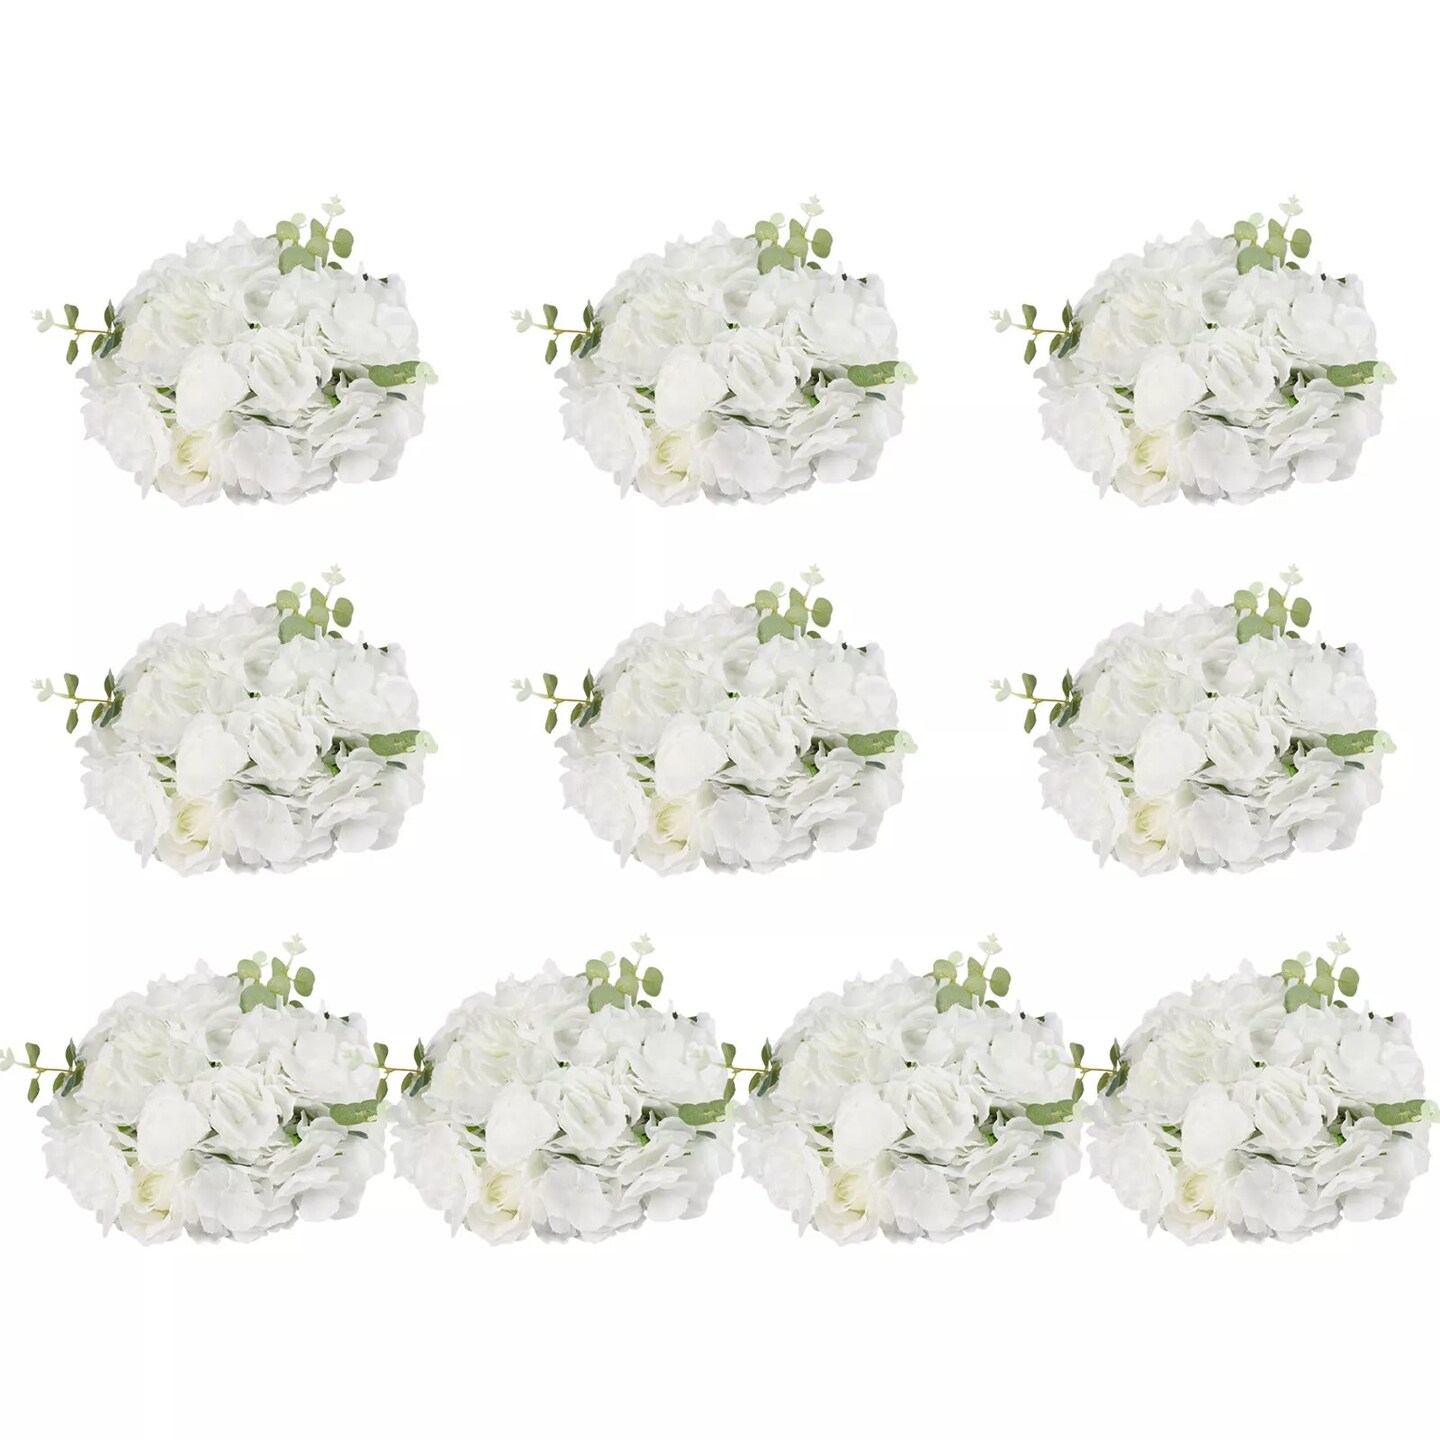 10-Pieces 12-Head Artificial Flower Balls for Wedding Centerpieces